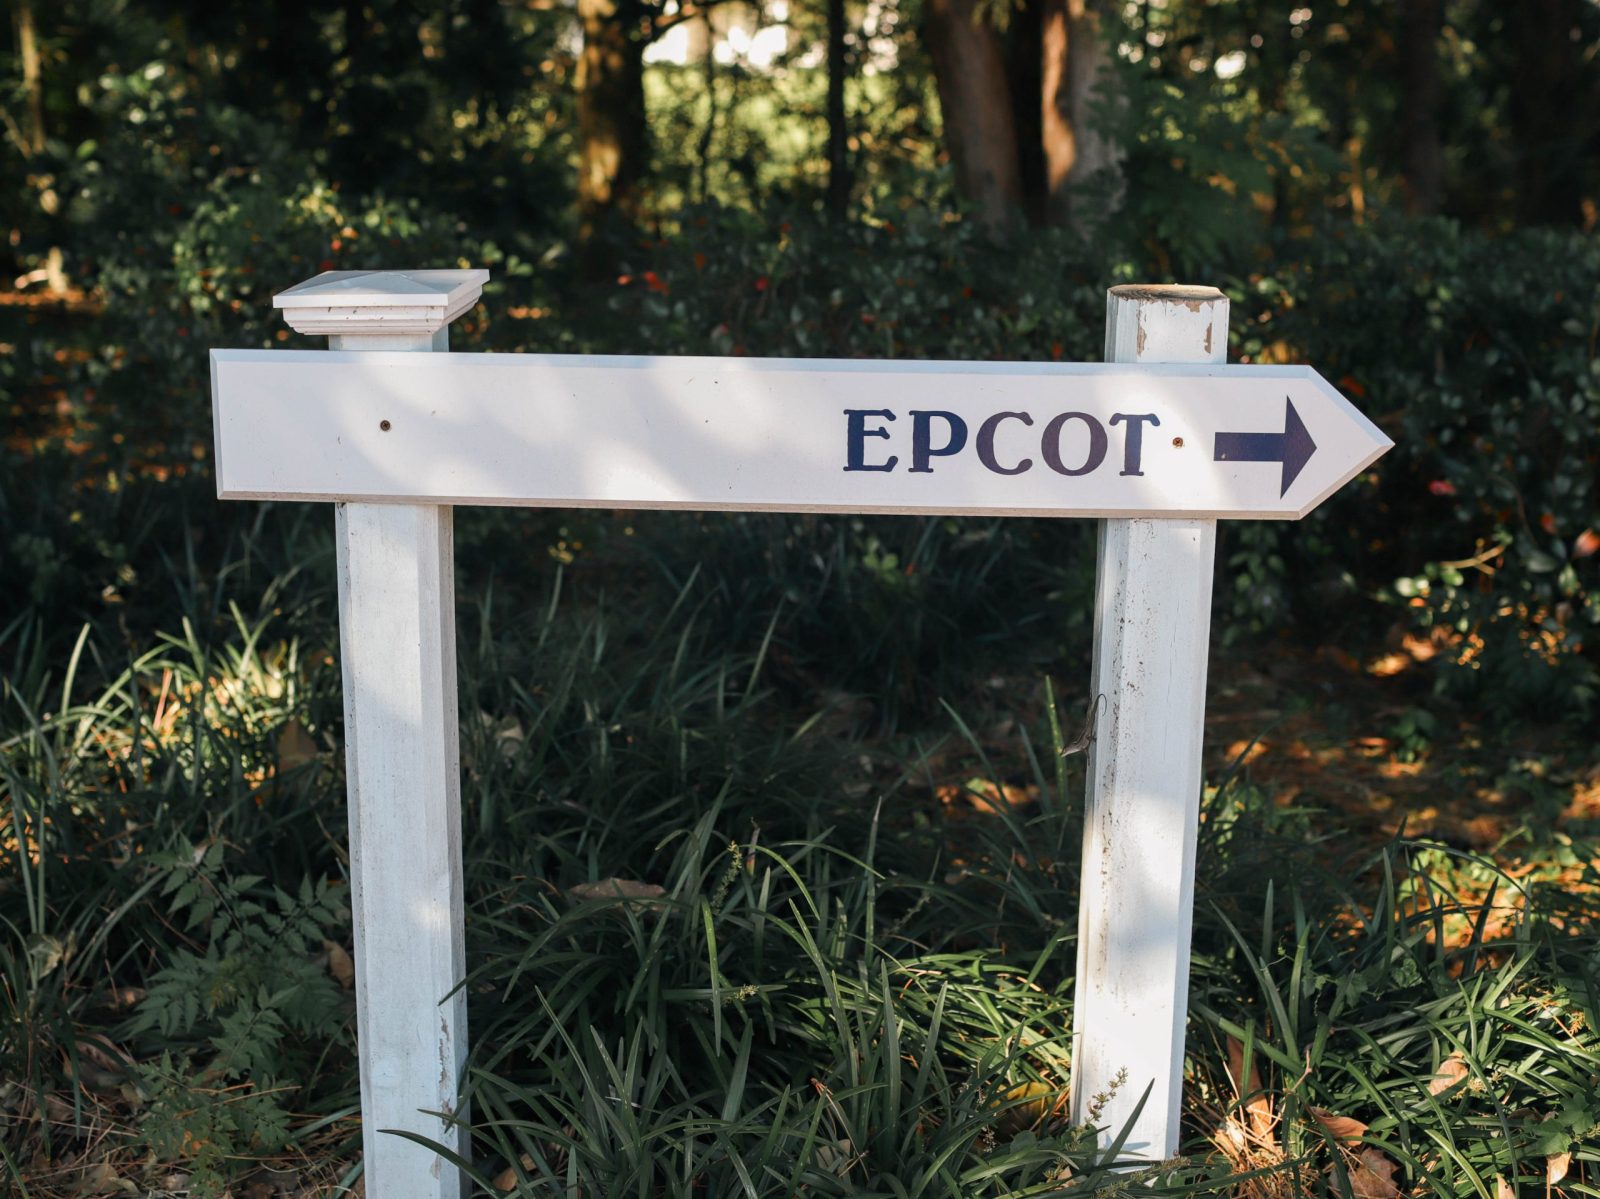 Walkway to EPCOT from Disney's BoardWalk.